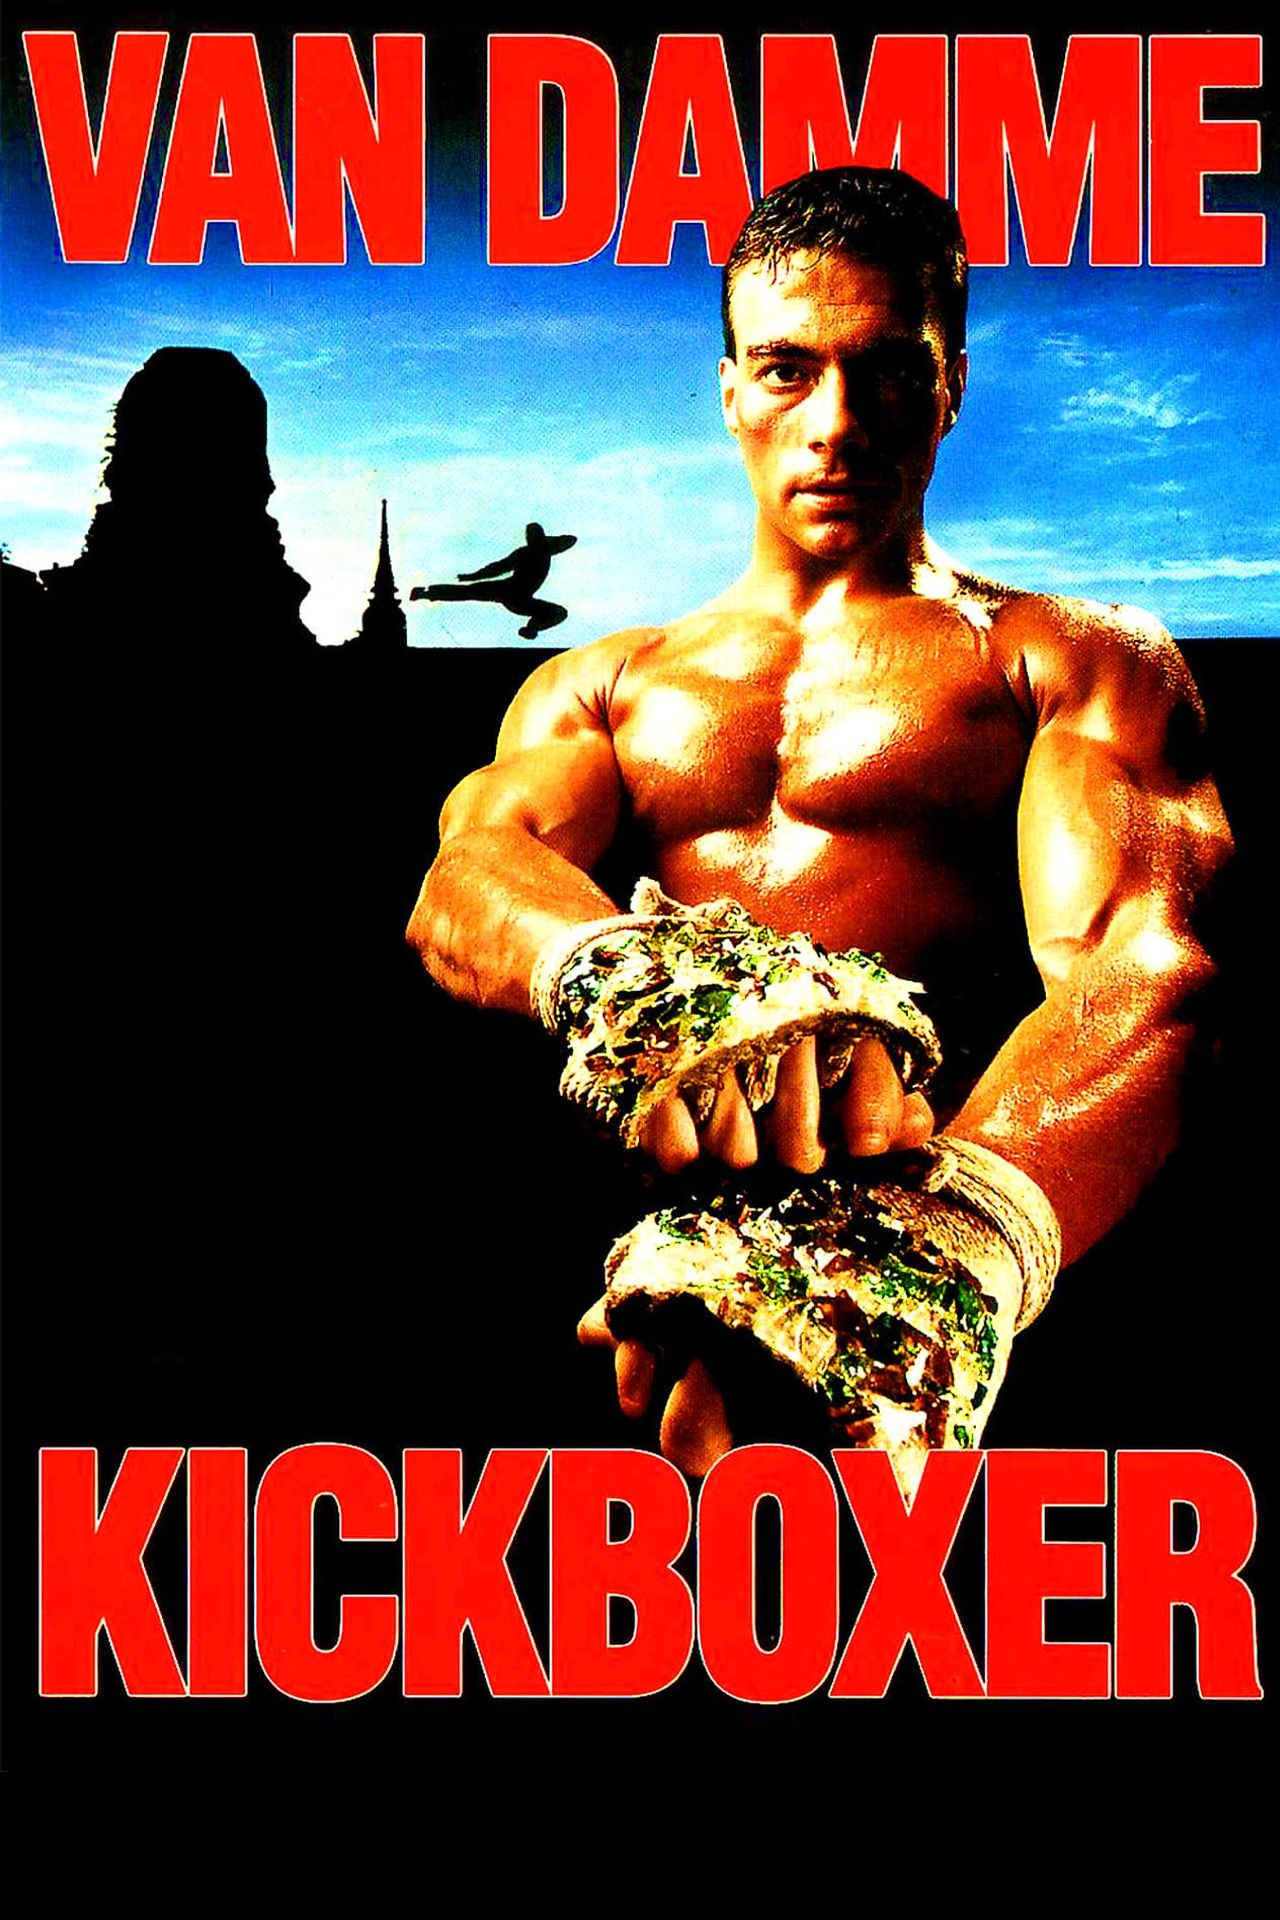 Kickboxer (Movie): A 1989 martial arts film starring Jean-Claude van Damme. 1280x1920 HD Background.